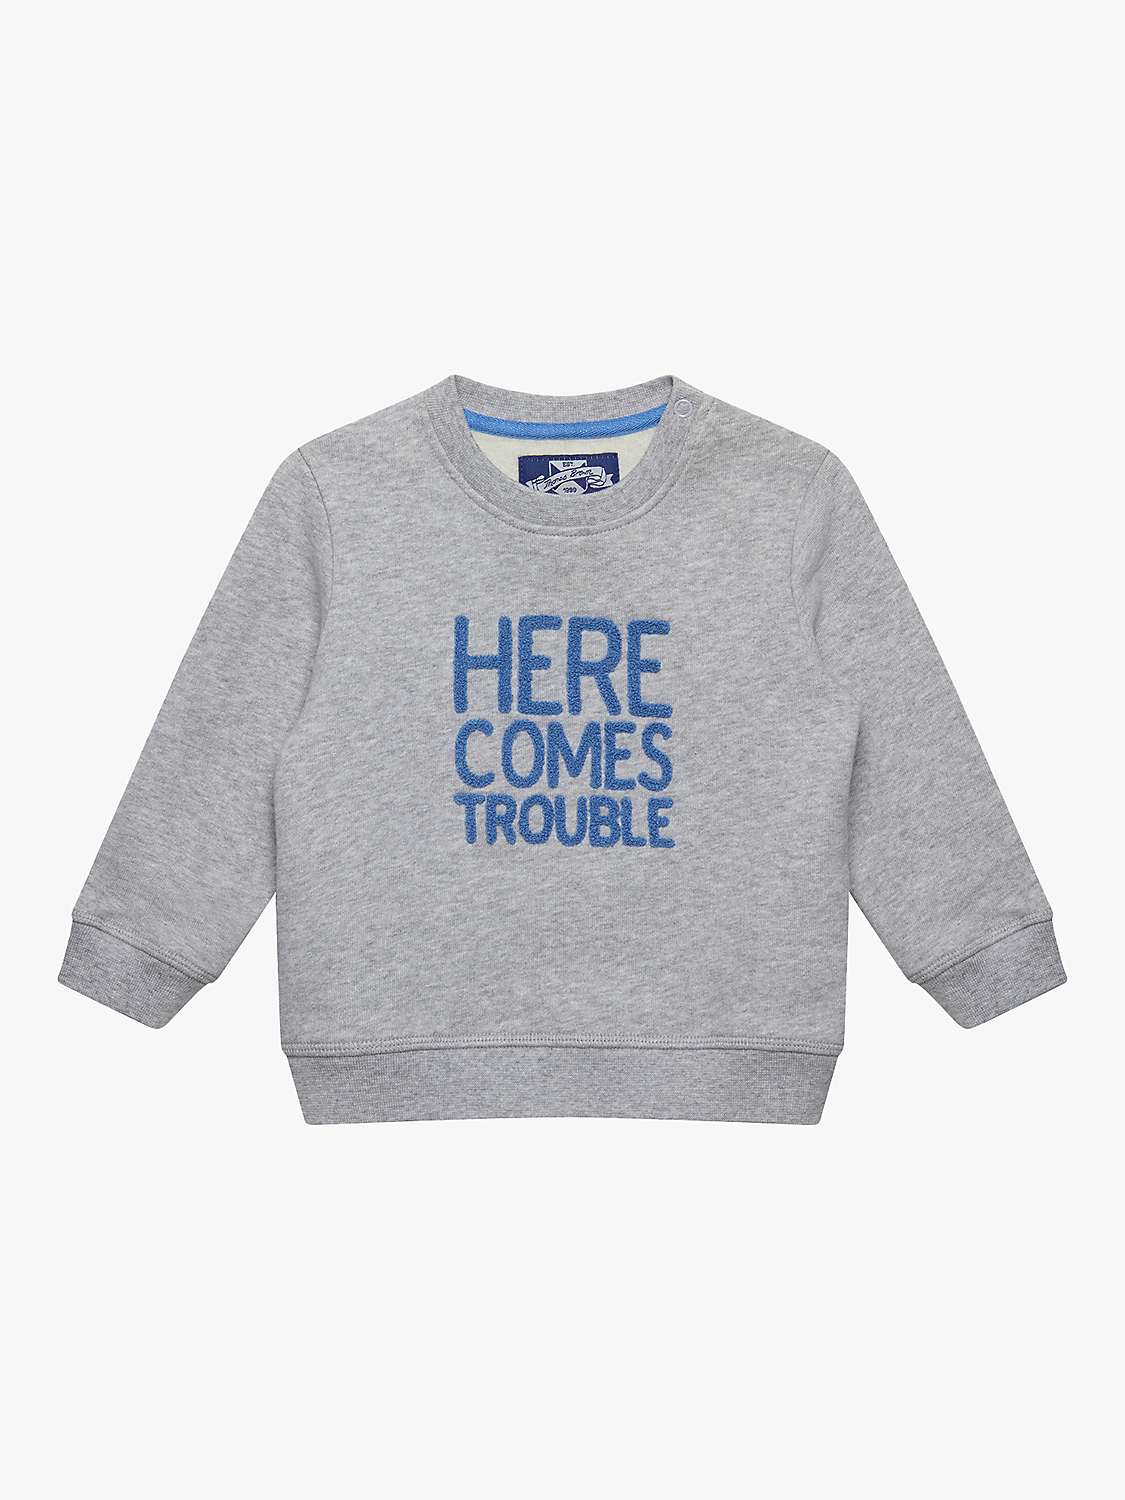 Buy Trotters Baby Here Comes Trouble Sweatshirt, Grey Marl Online at johnlewis.com